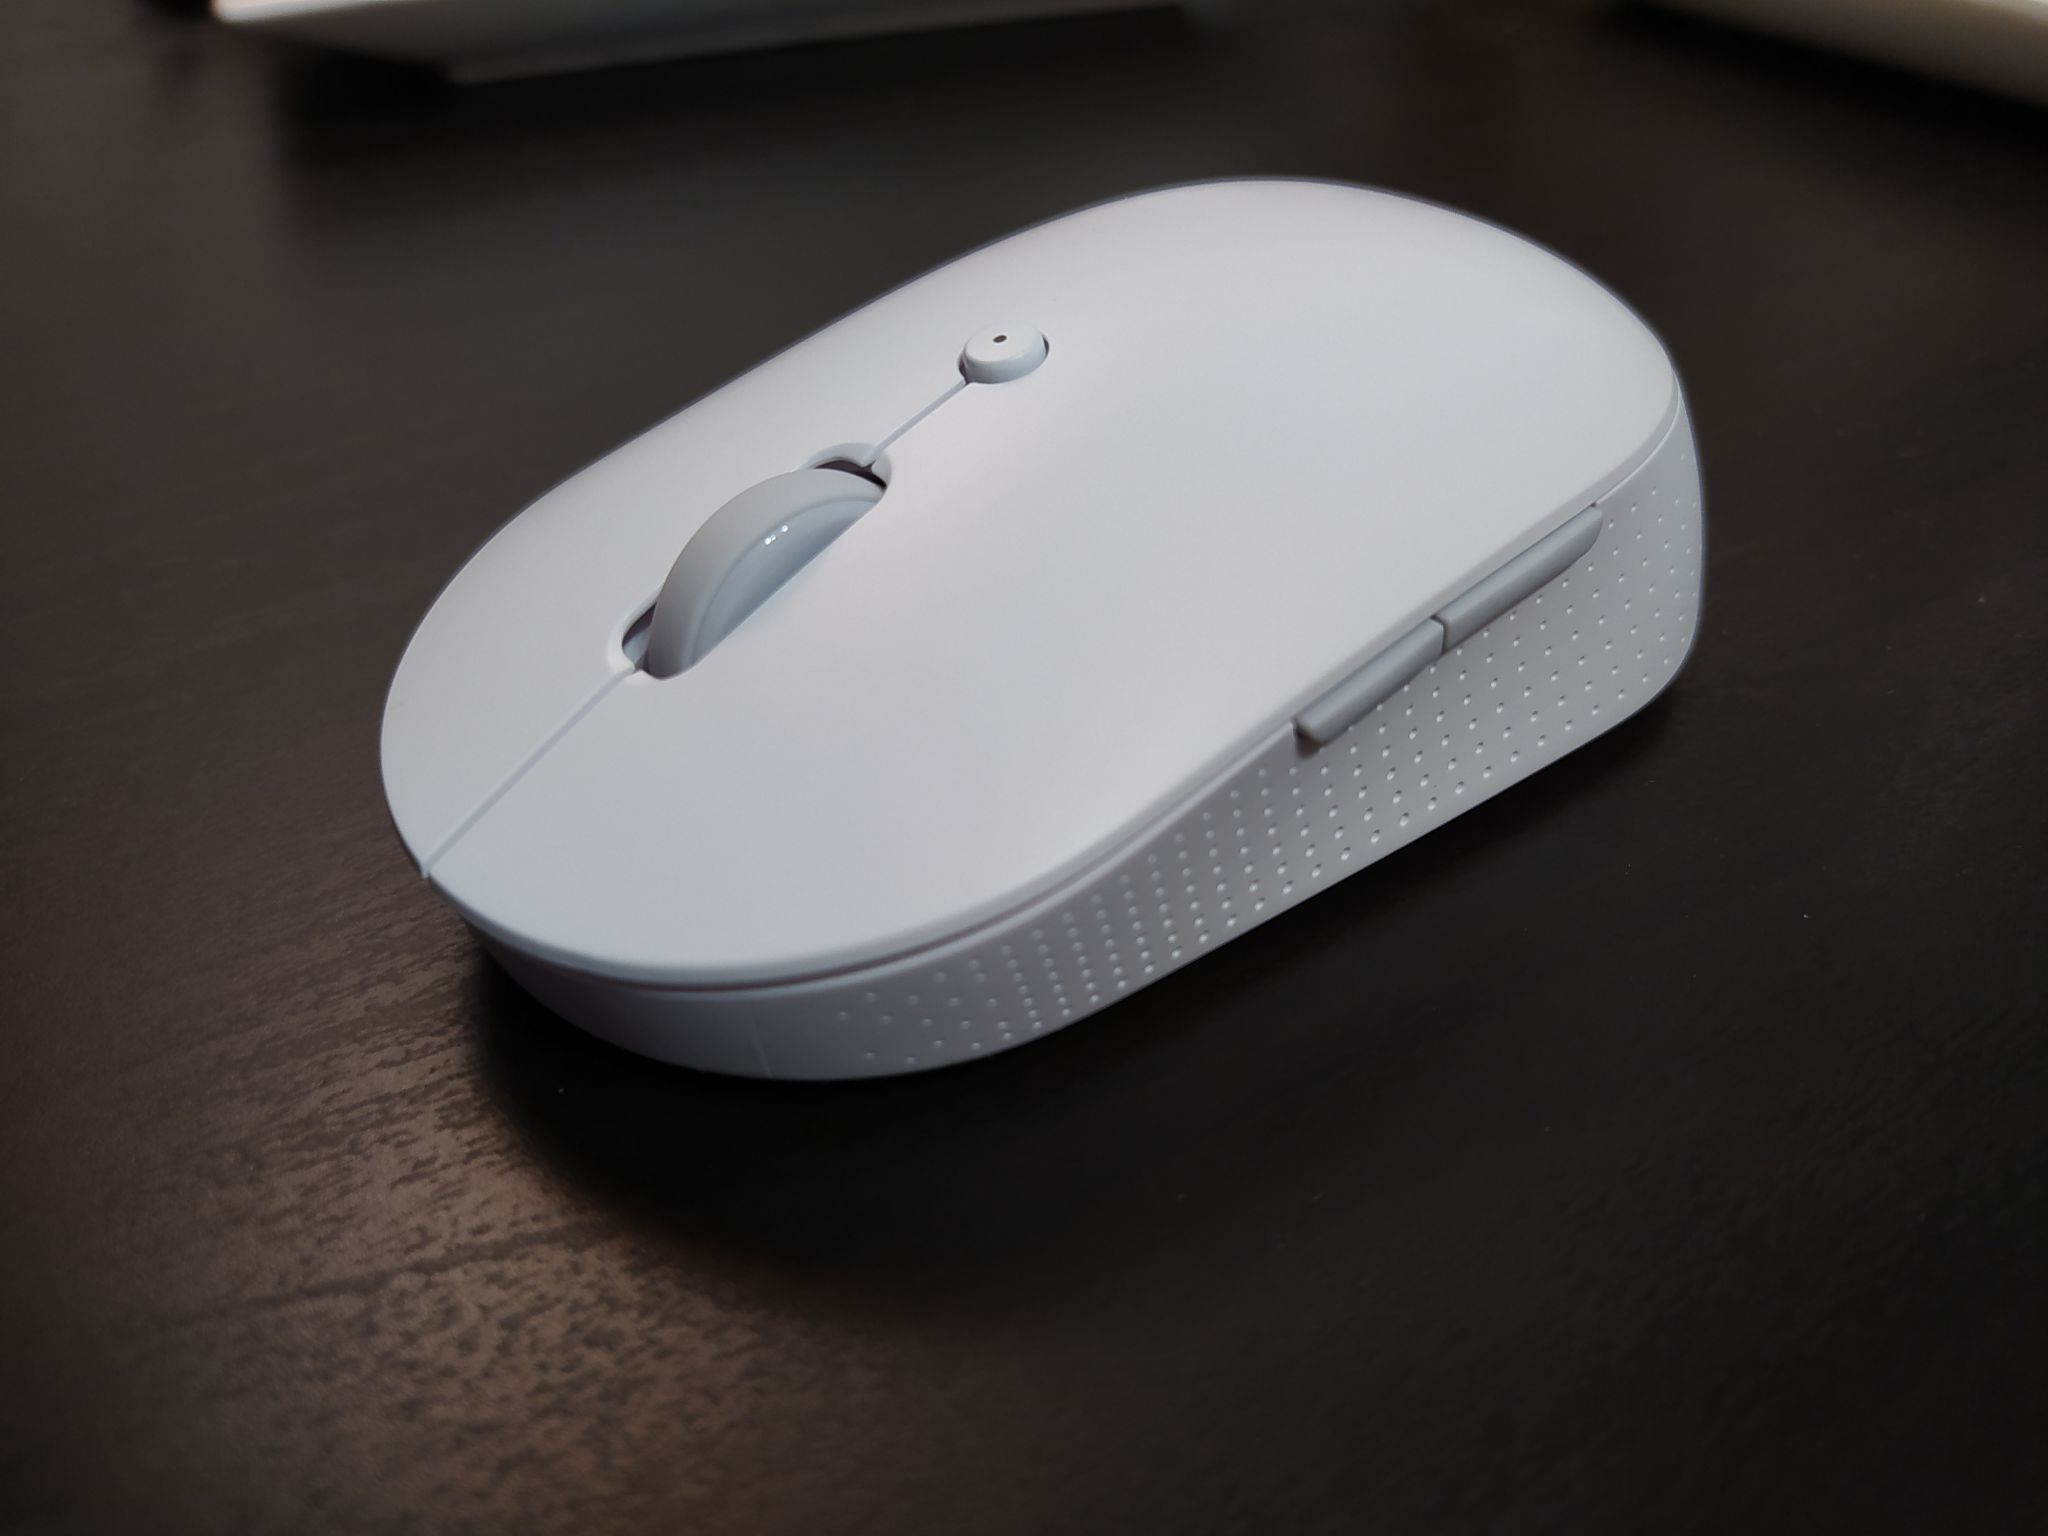 Xiaomi mi Dual Mode Wireless Mouse Silent Edition (White) hlk4040gl. Мышь Xiaomi mi Dual Mode Wireless Mouse Silent Edition White. Мышь беспроводная mi Dual Mode (hlk4040gl). Мышь Xiaomi mi Dual Mode Silent Edition. Беспроводная мышь xiaomi silent edition